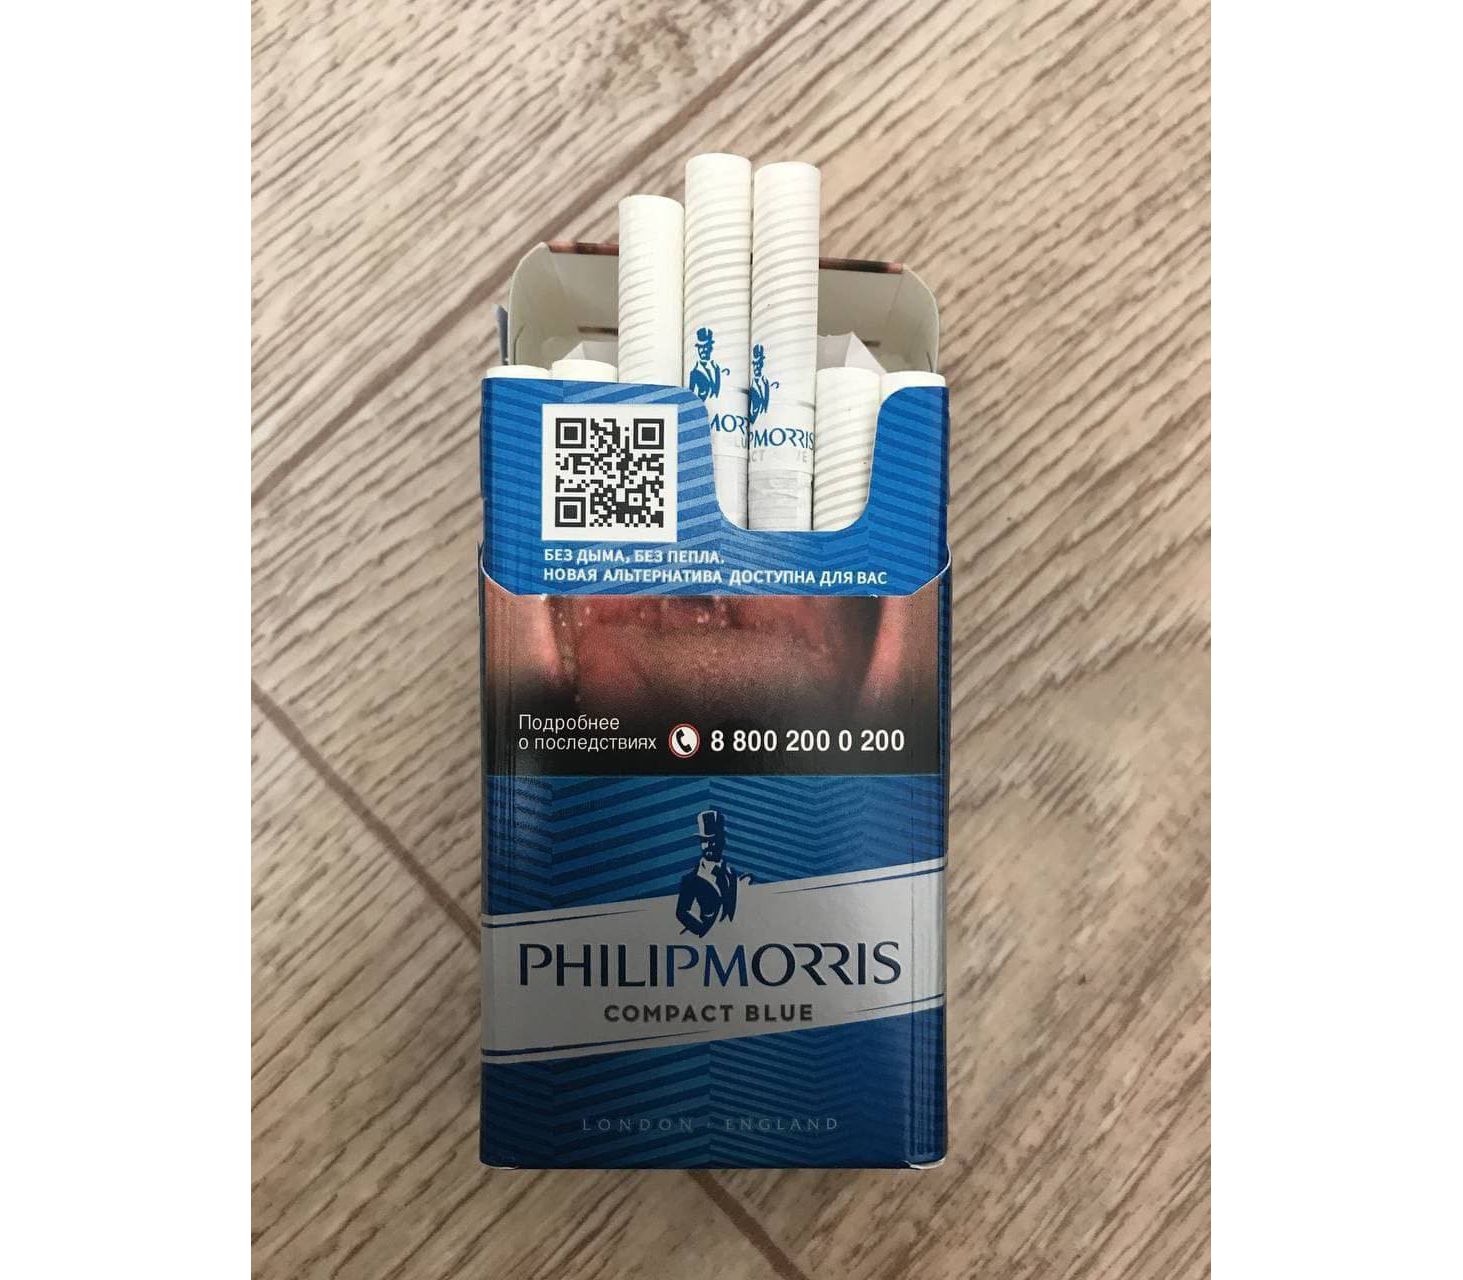 Филип моррис компакт. Сигареты Philip Morris Compact синий. Сигареты Филип Морис компакт. Филипс Морис сигареты компакт синие.